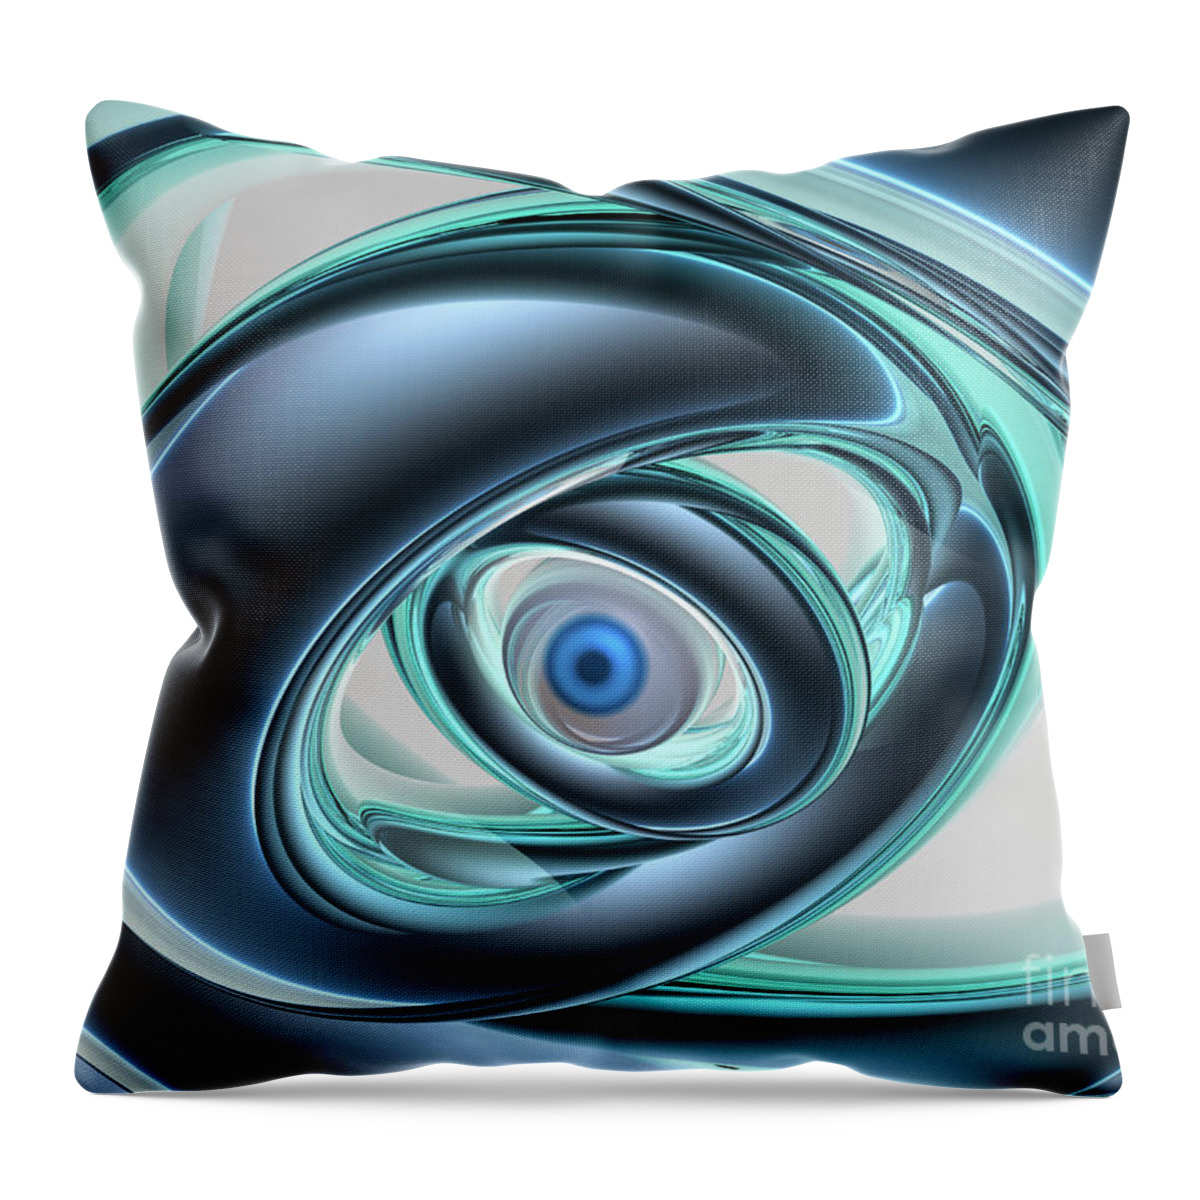 Digital Art Throw Pillow featuring the digital art Blue Eyes of A Machine by Phil Perkins